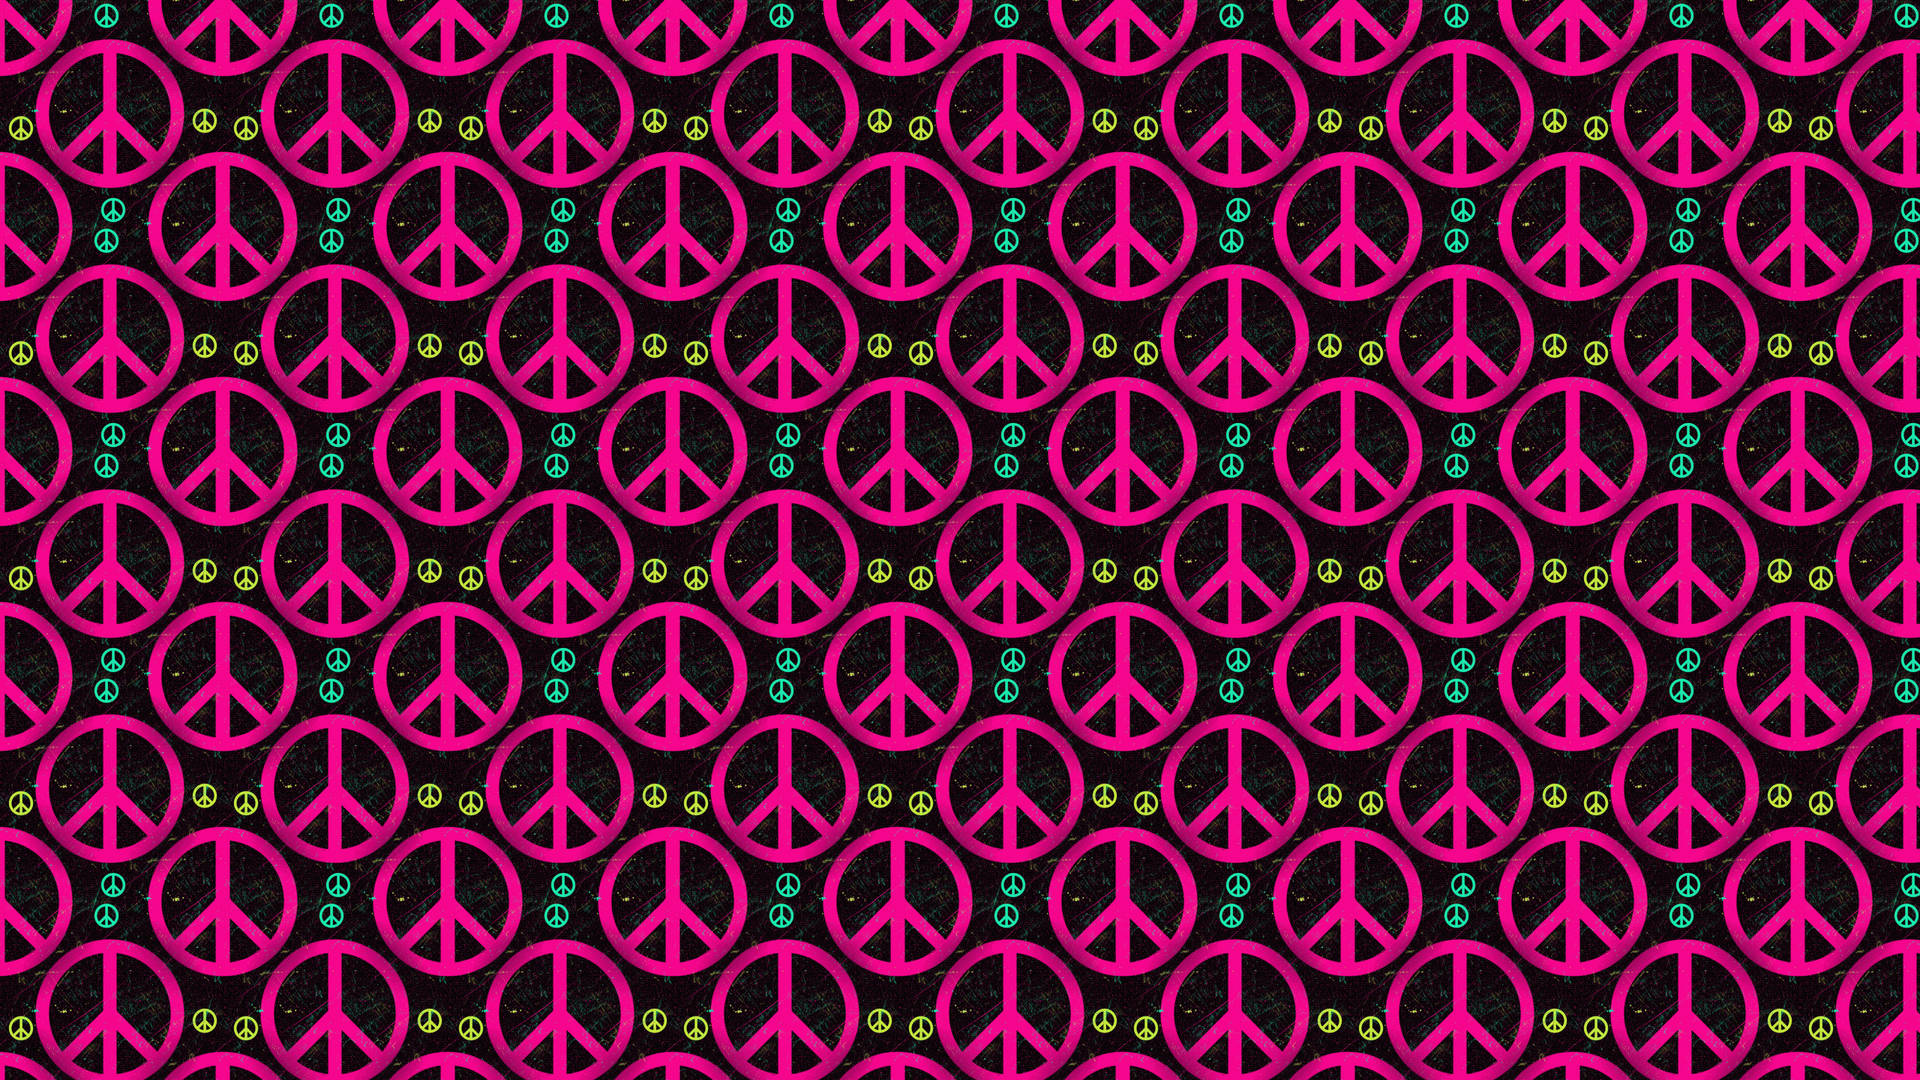 Fuchsia Pink Peace Symbols Wallpaper